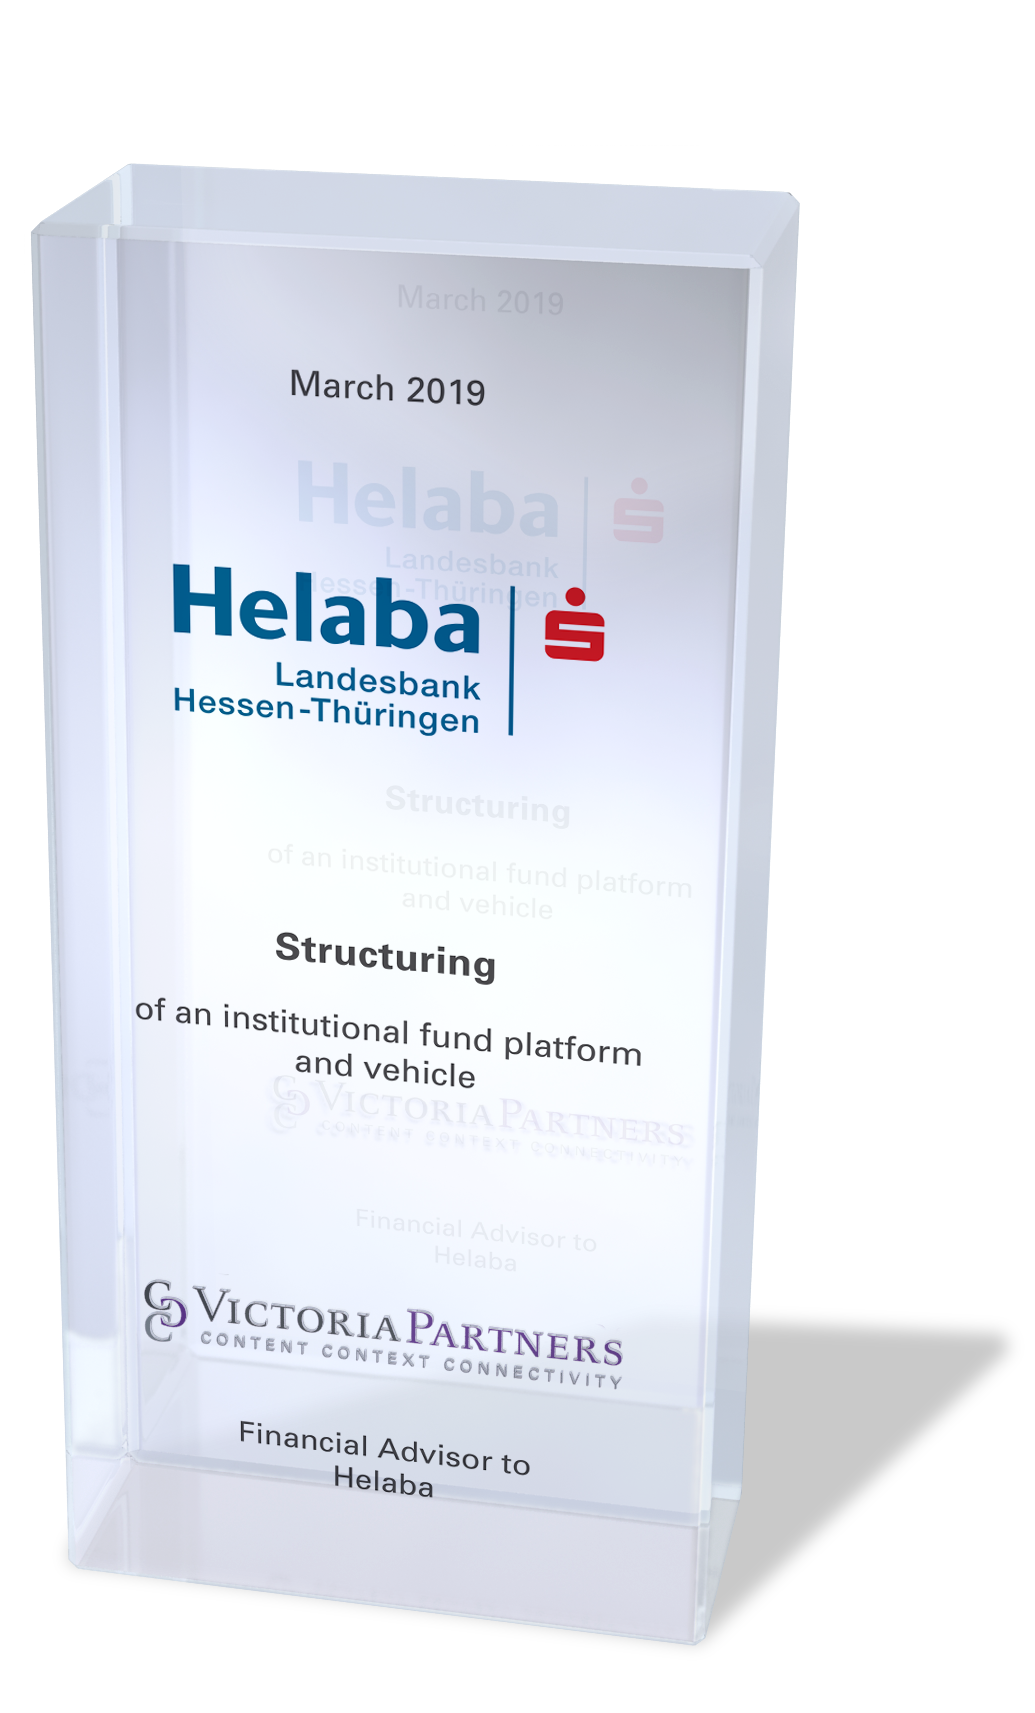 VICTORIAPARTNERS - Financial Advisor to Helaba - March 2019